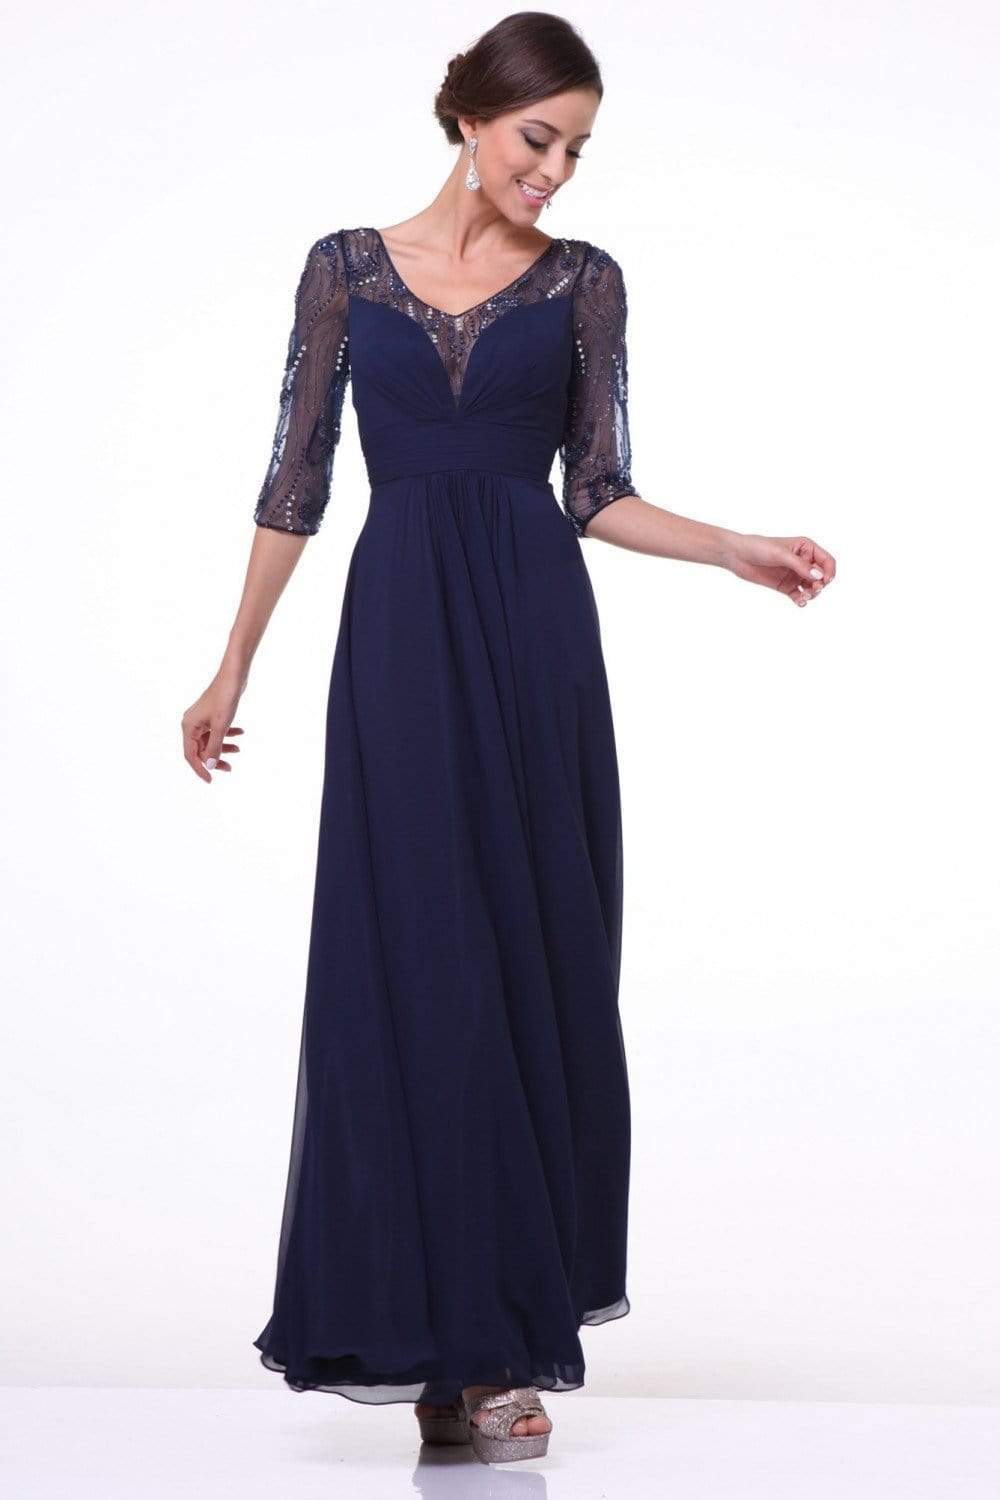 Cinderella Divine - 967 Sheer Quarter Length Sleeve Ruched A-line Dress Special Occasion Dress 2 / Navy